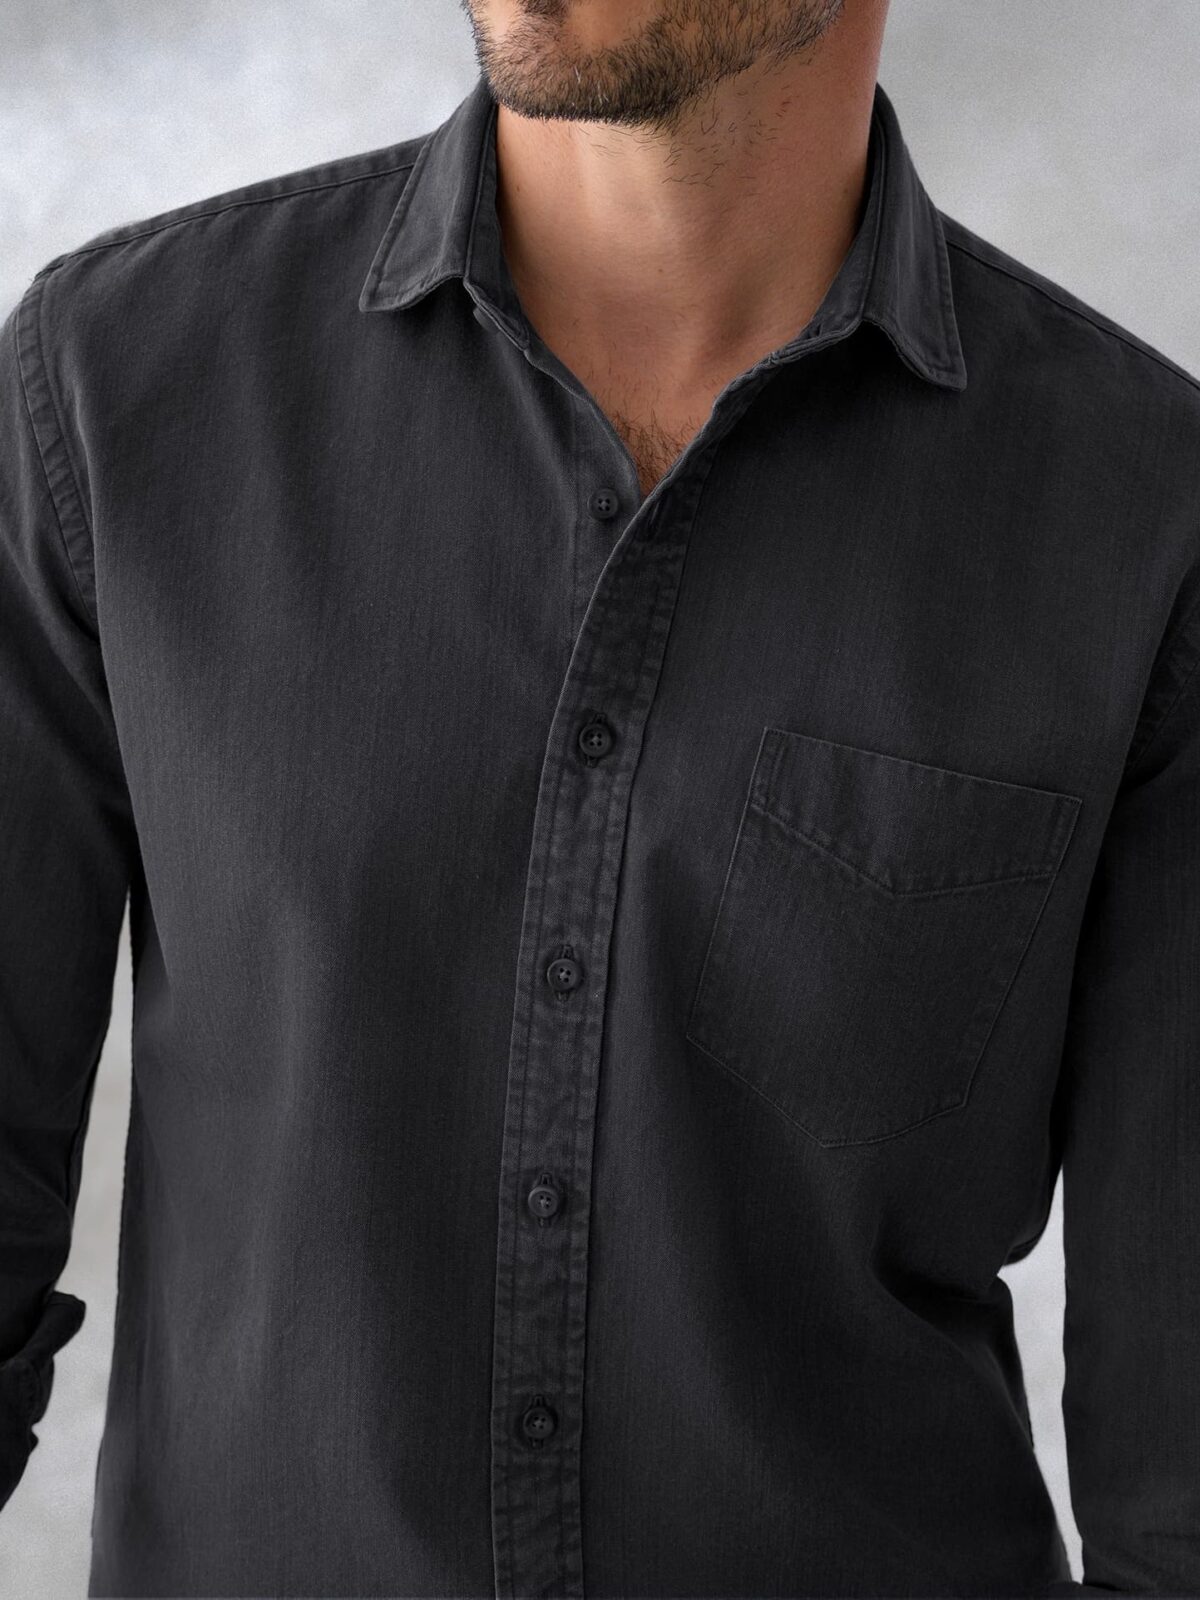 Men Black Denim Shirts - Buy Men Black Denim Shirts online in India